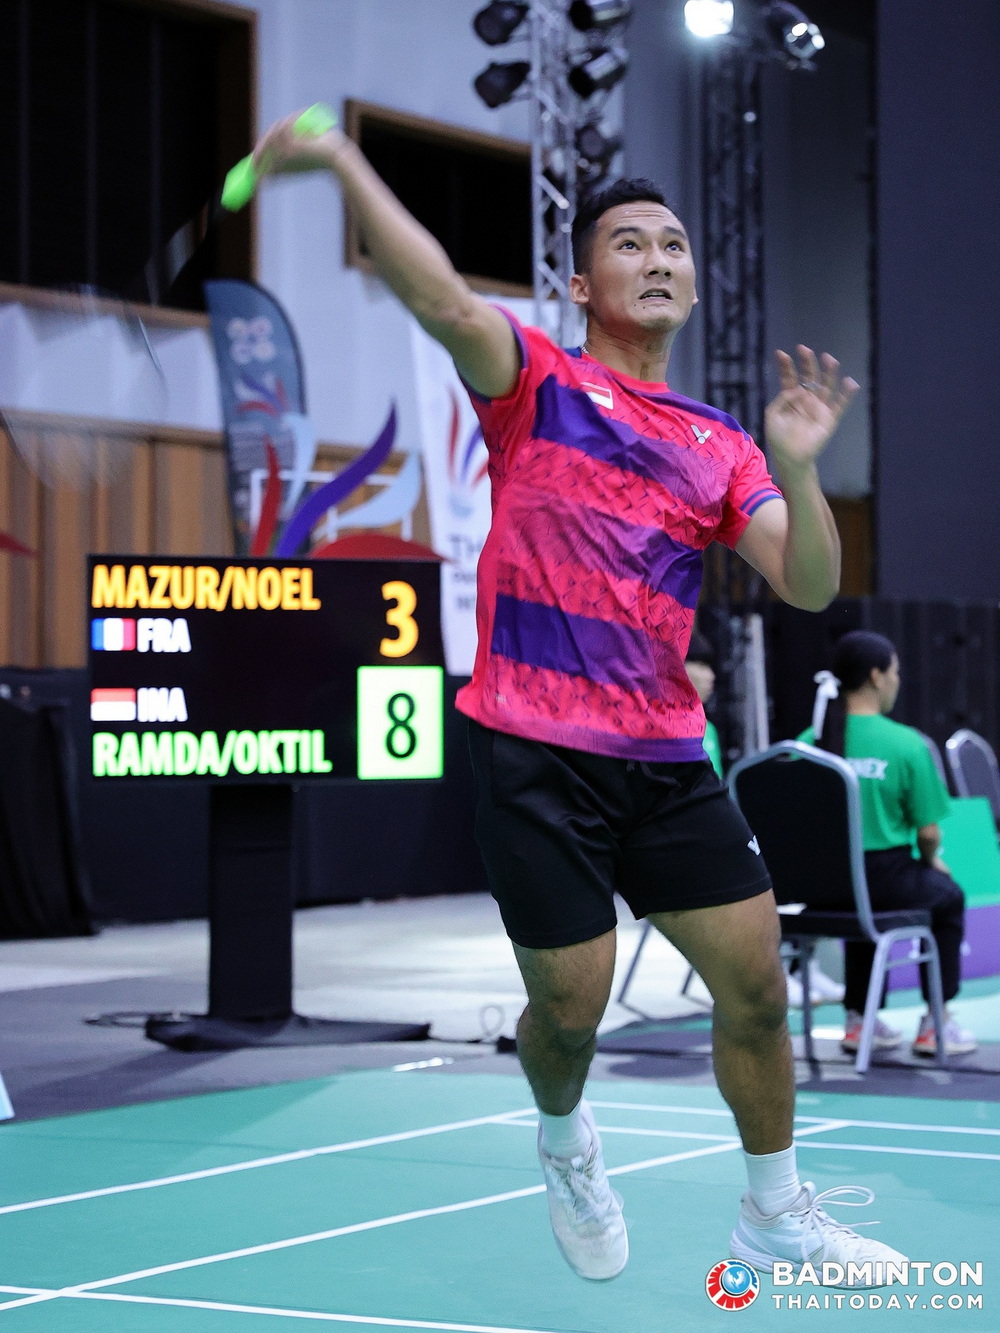 Thailand Para Badminton International 2023 (Final) รูปภาพกีฬาแบดมินตัน